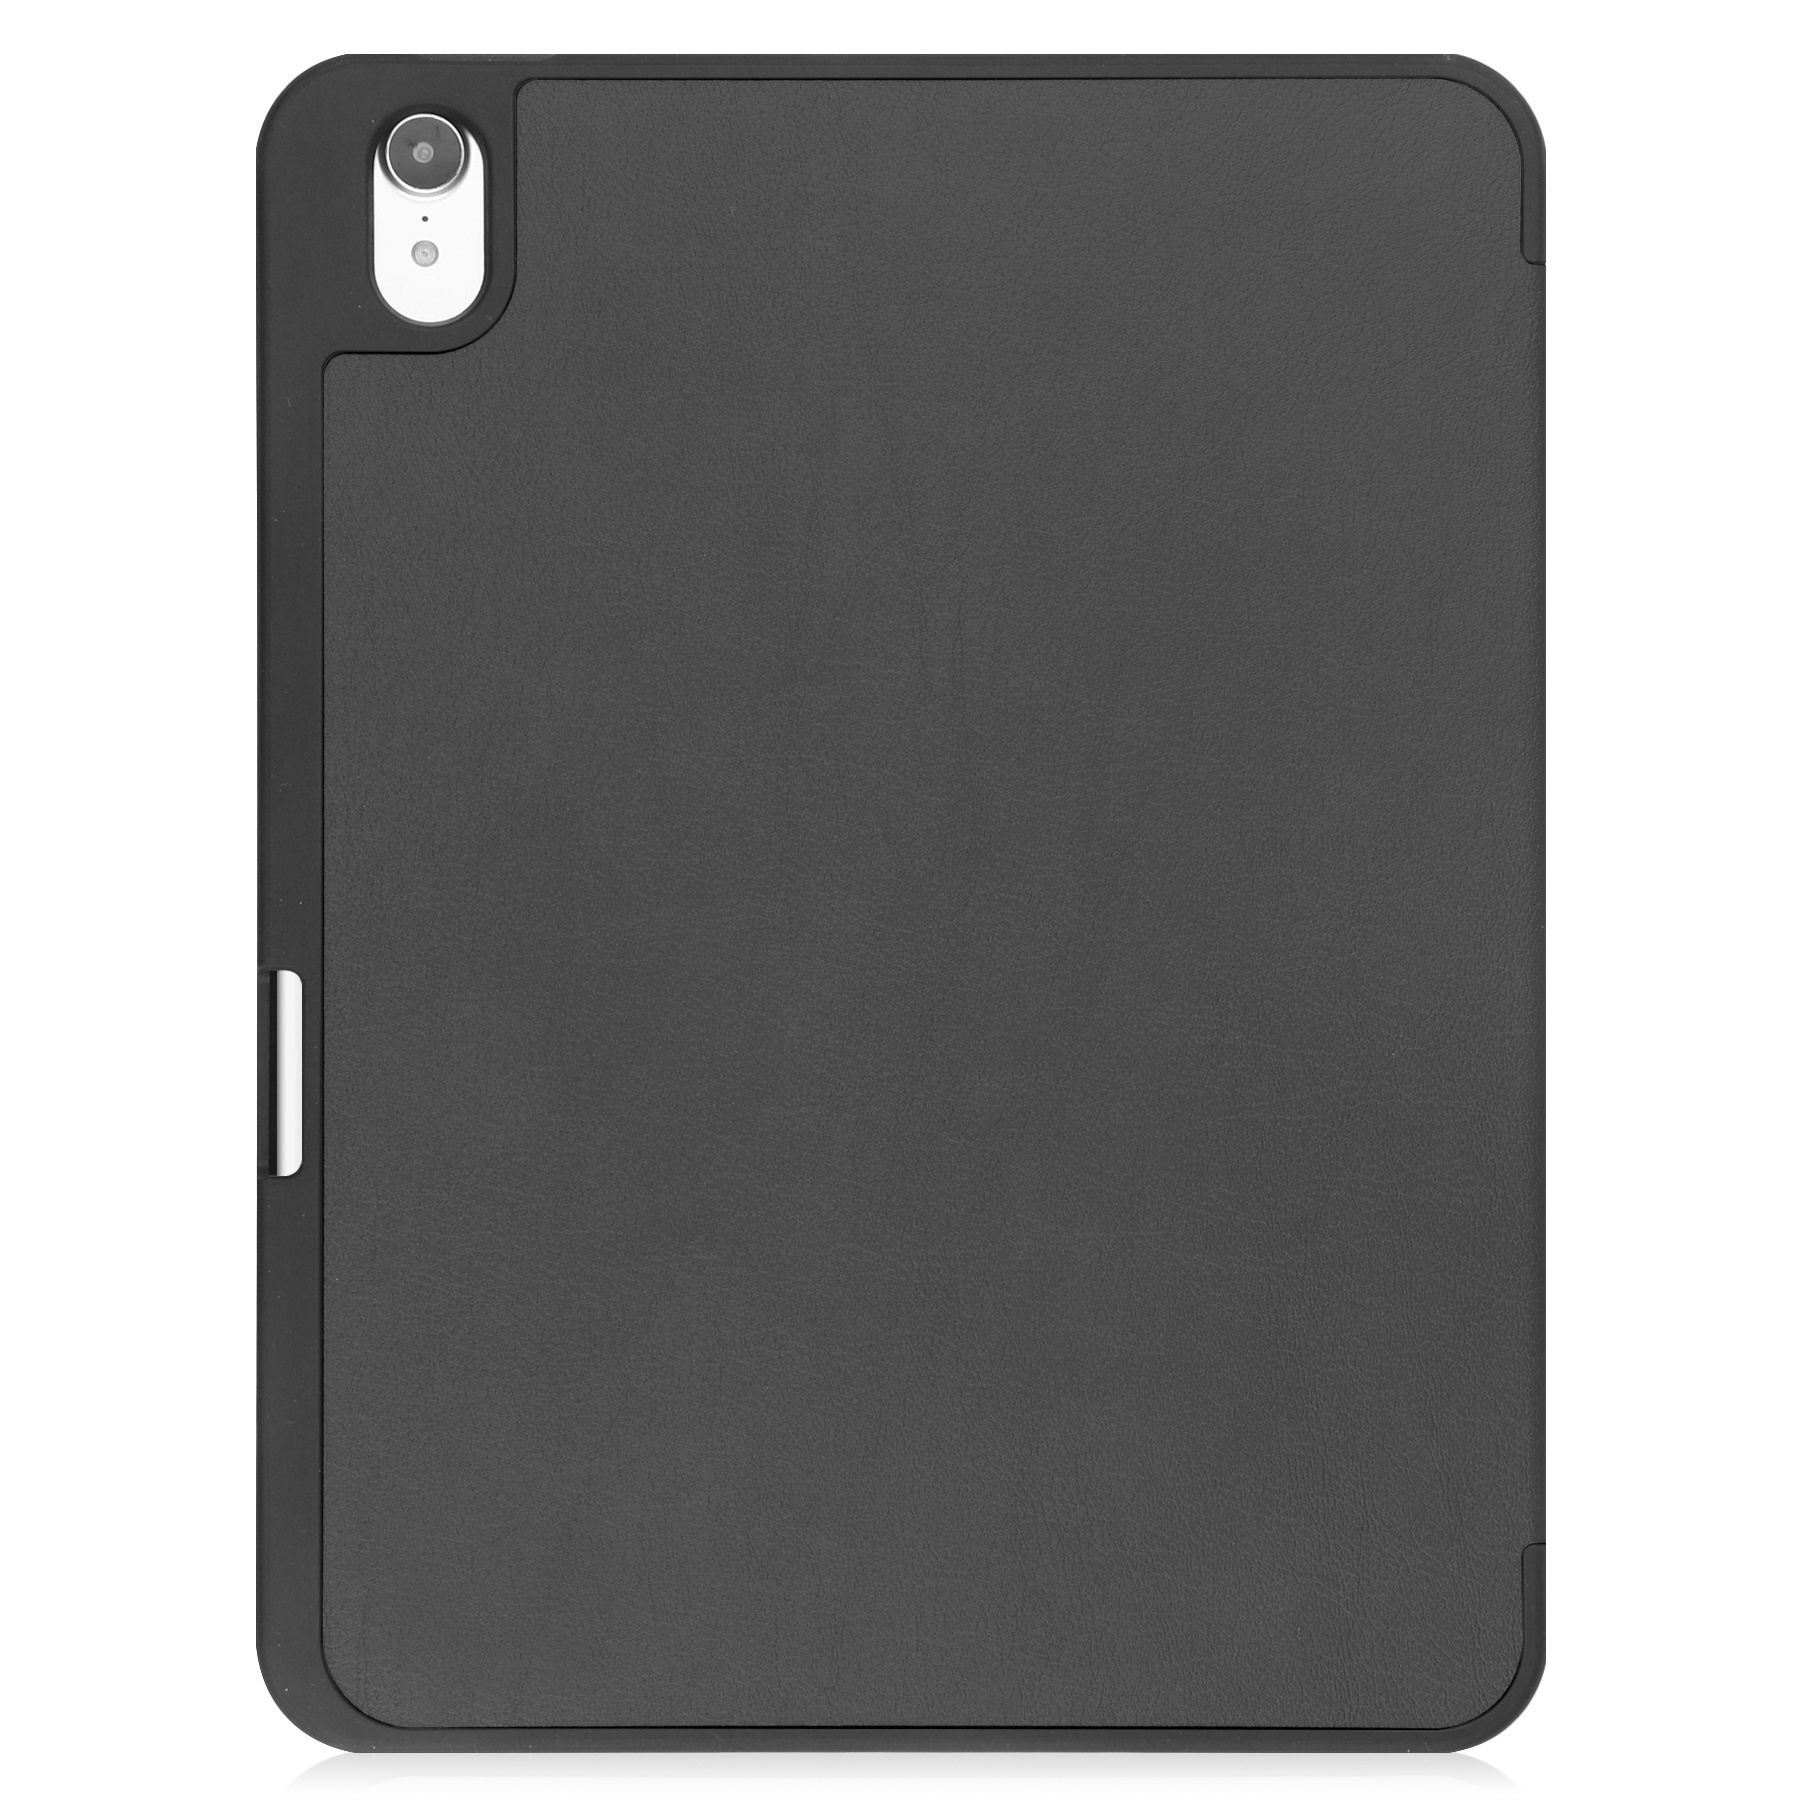 iPad 2022 Hoesje Book Case Hard Cover Hoes Met Uitsparing Apple Pencil Met Screenprotector - iPad 10 Hoes Hardcover - Zwart